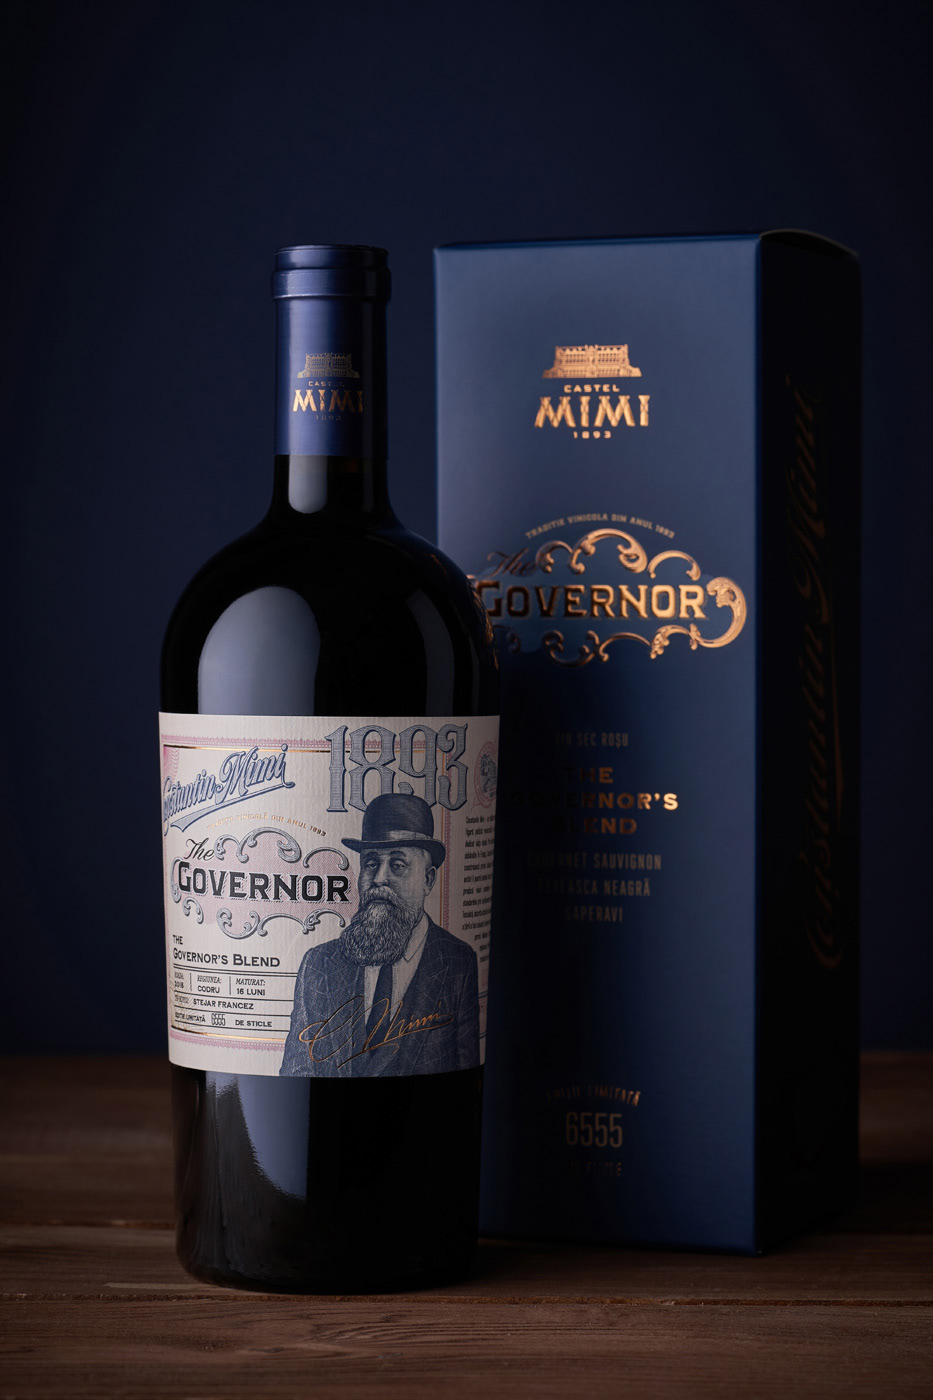 43oz castel mimi constantin mimi design studio label design Moldova premium wine the governor wine label